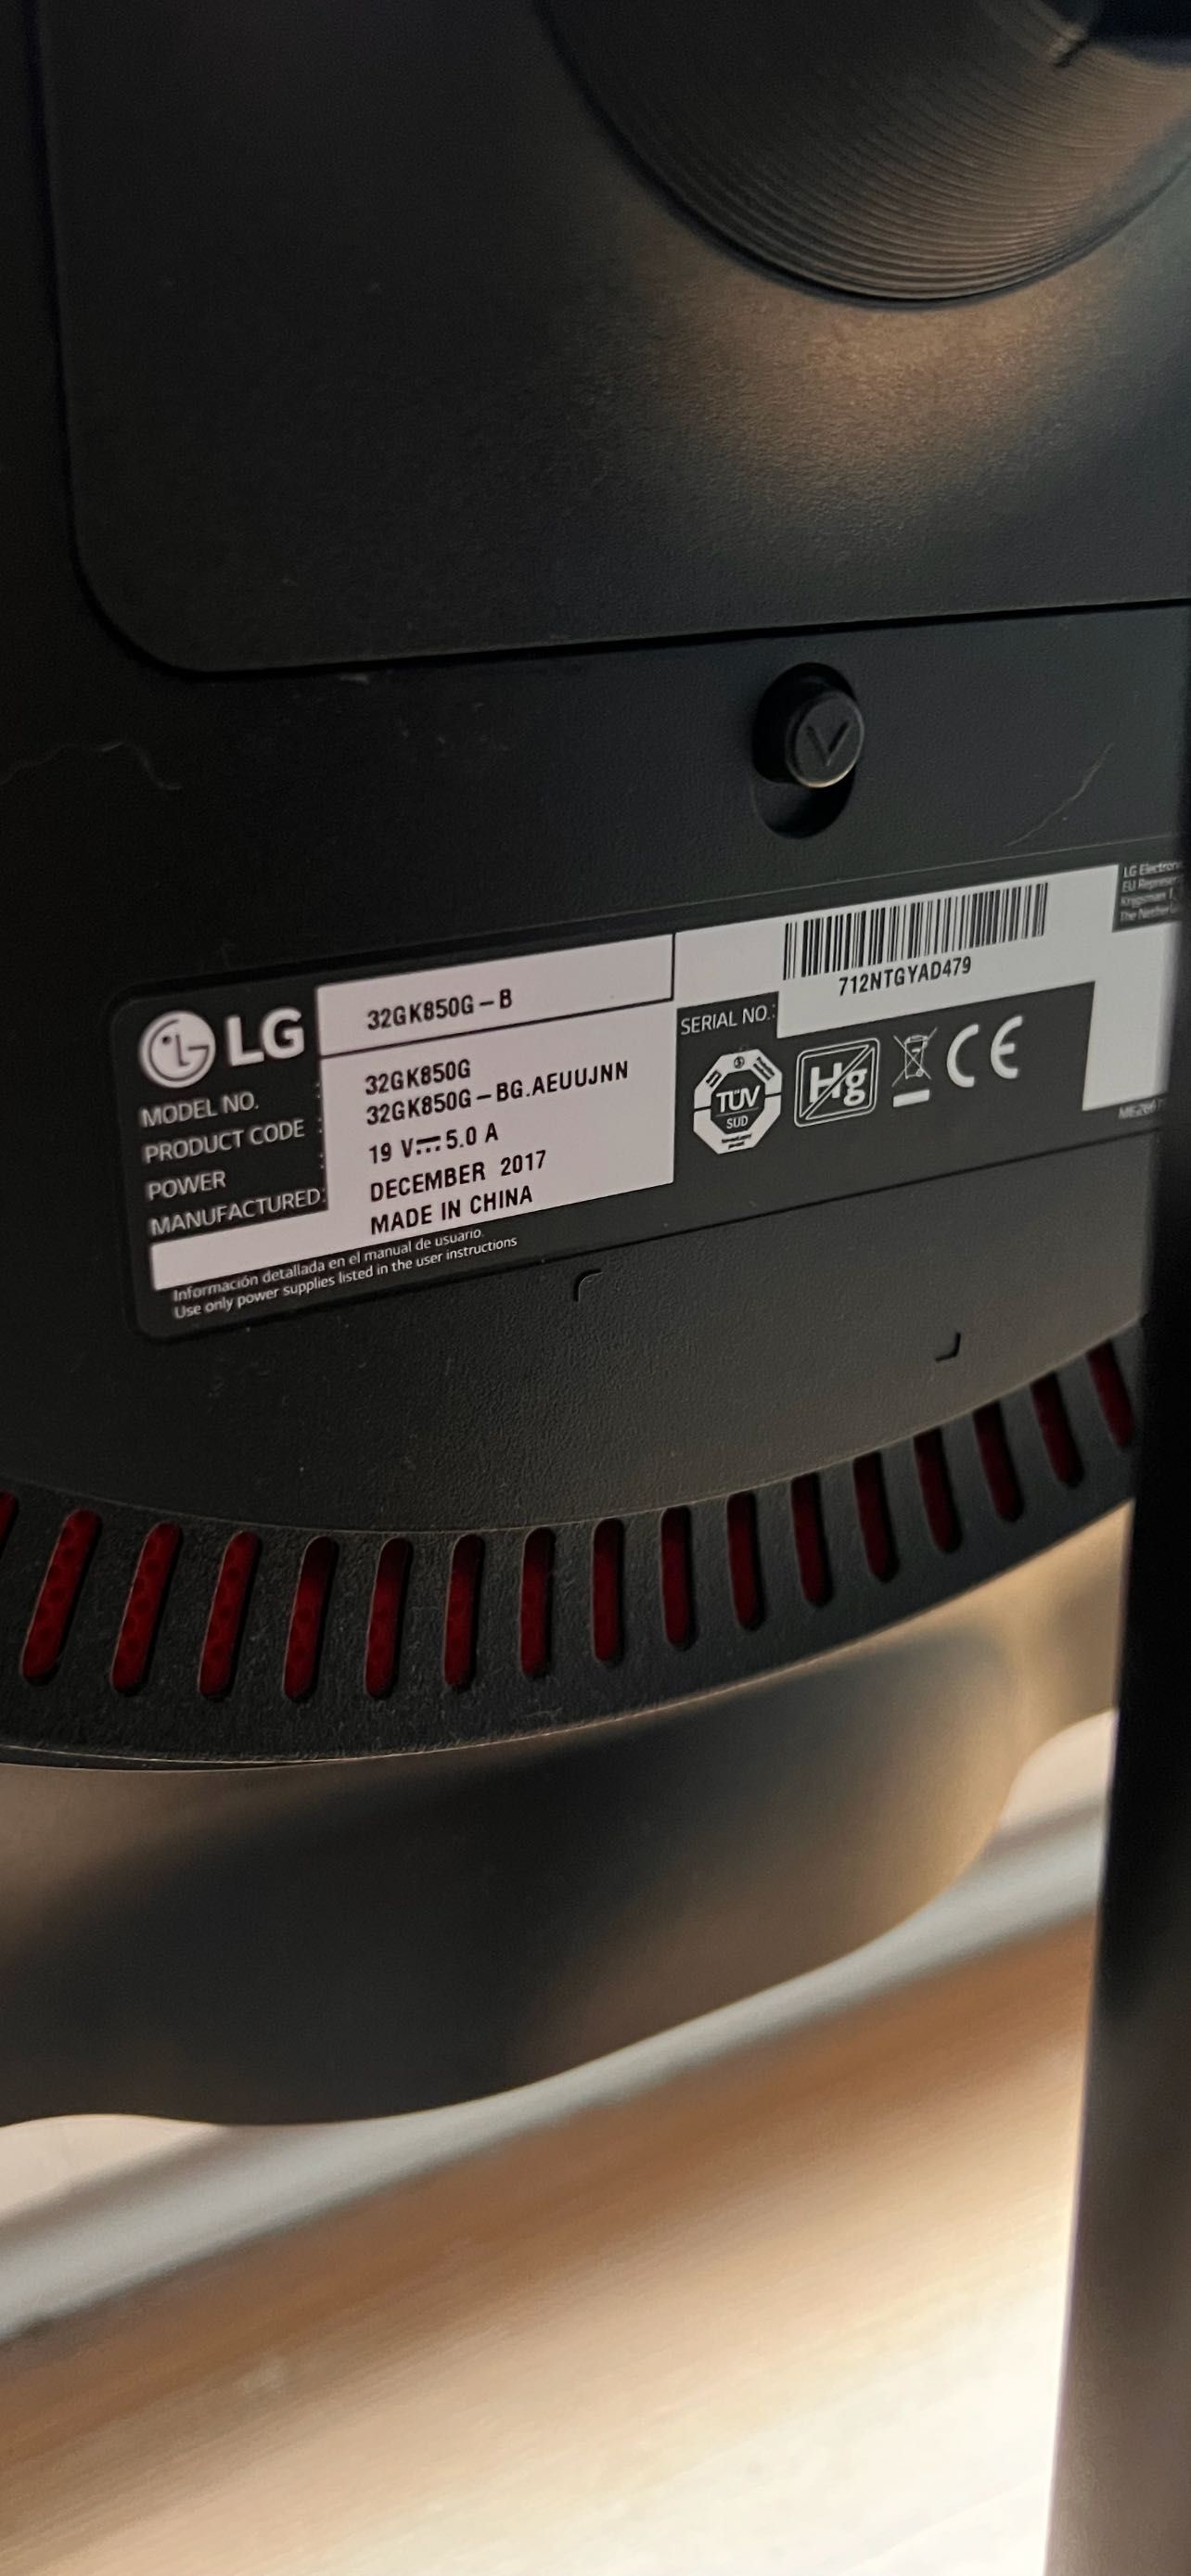 Monitor LG 32”GK850-G